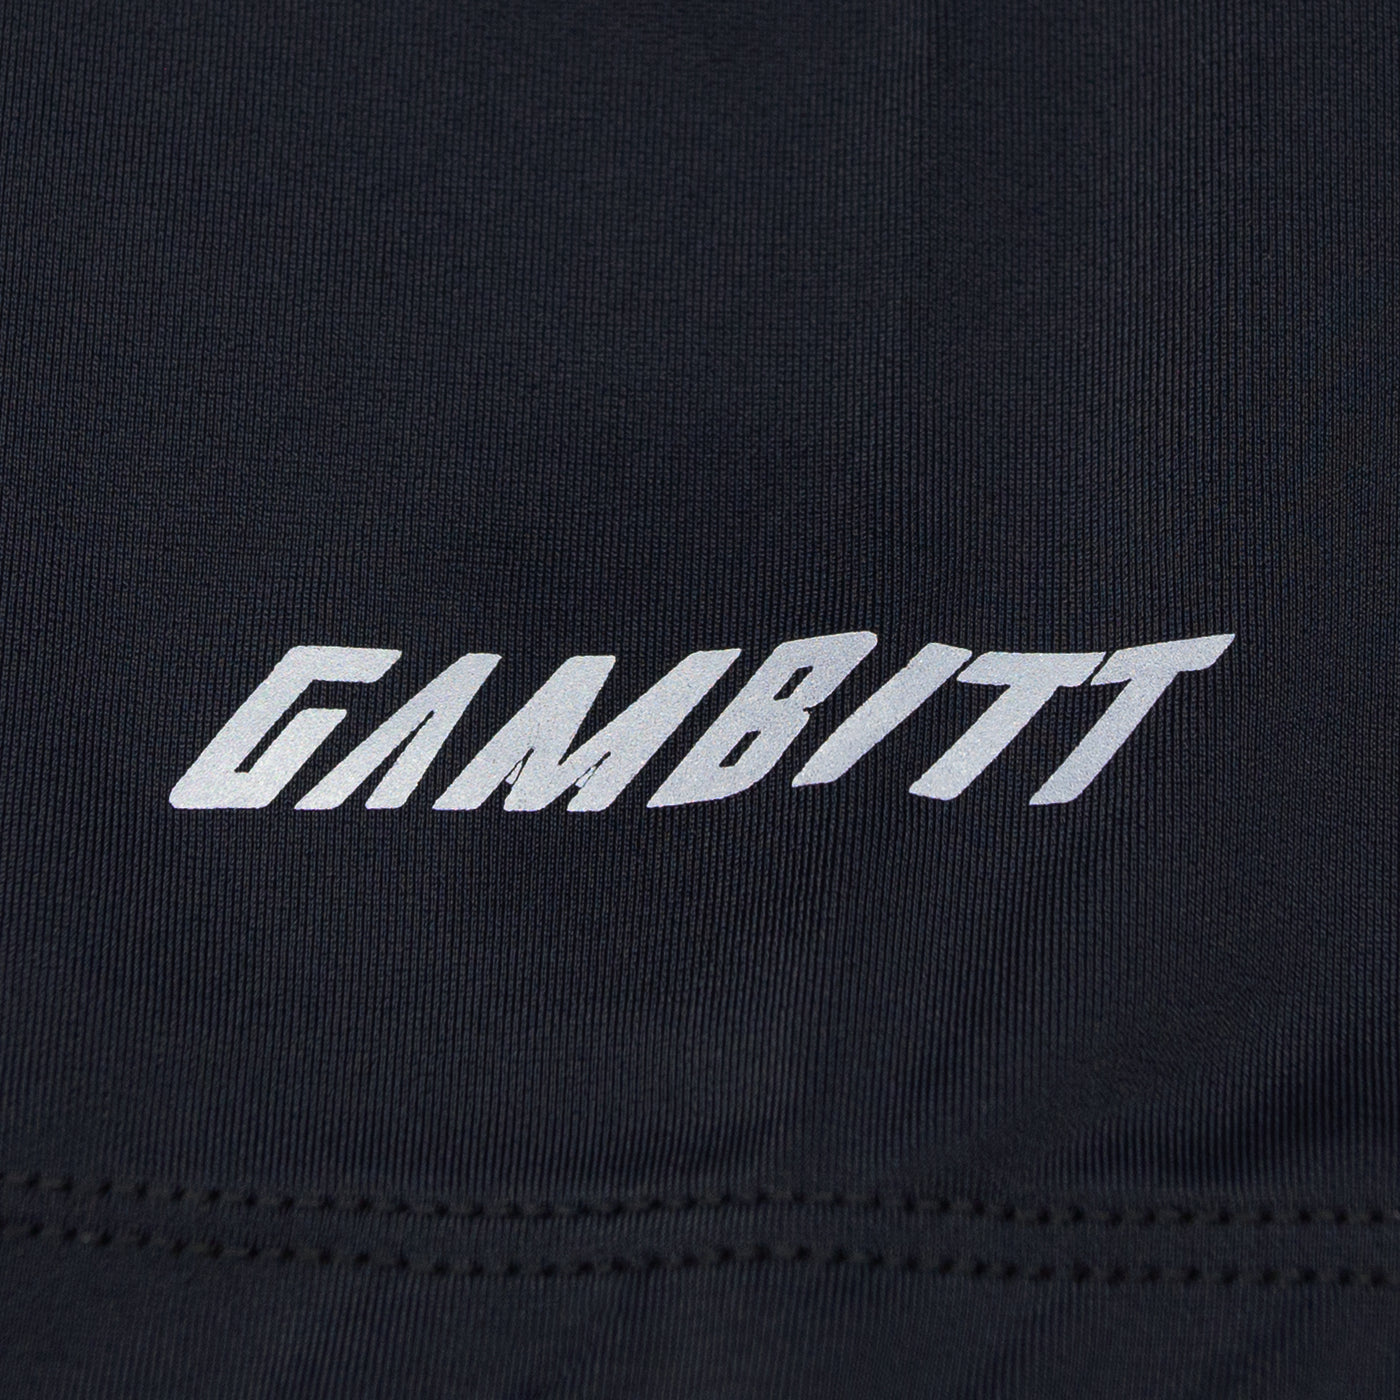 Gambitt Coregel Mens Cycling Bibshorts (Black)